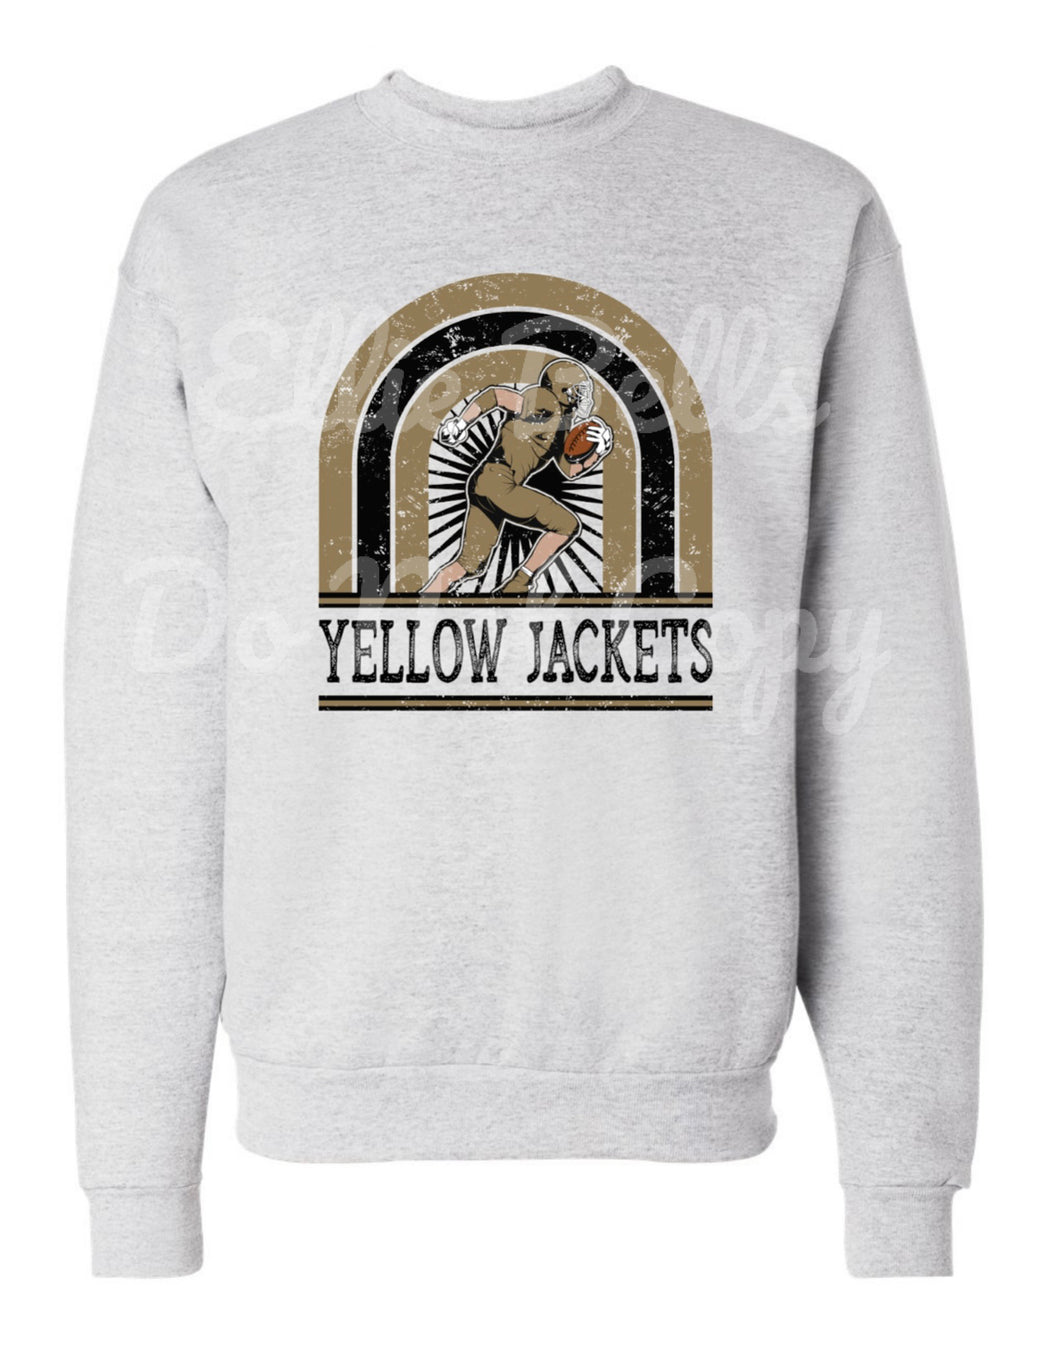 Vintage Yellow Jackets t-shirt or sweatshirt